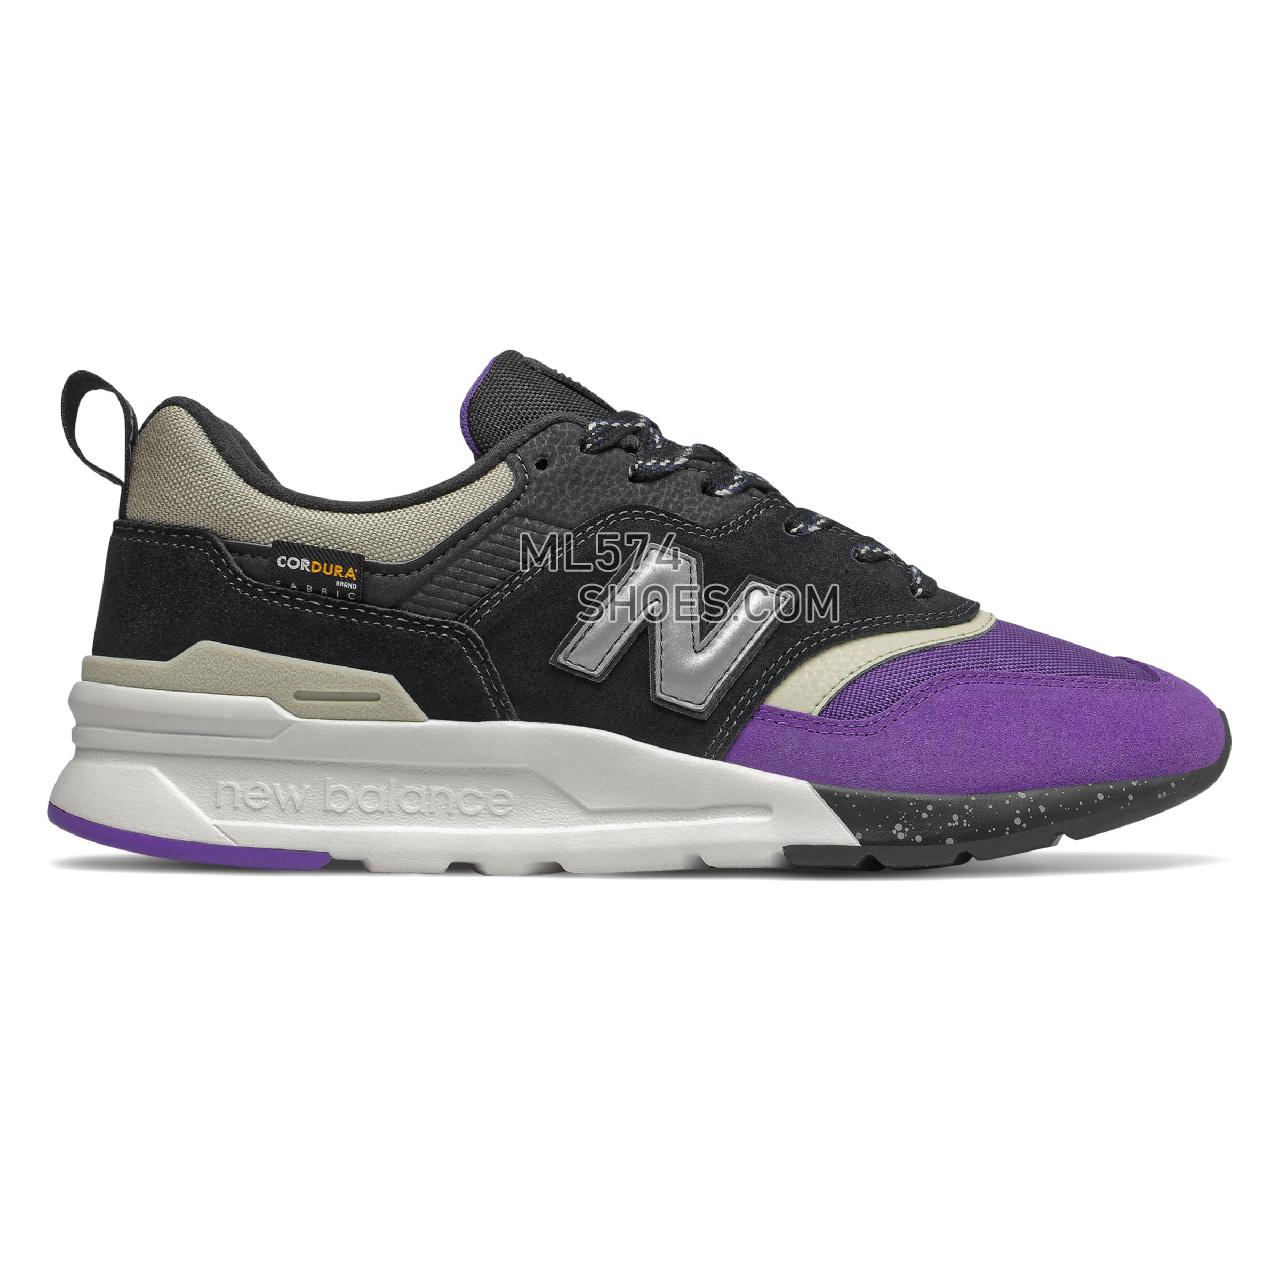 New Balance 997H - Men's Classic Sneakers - Black with Prism Purple - CM997HYT